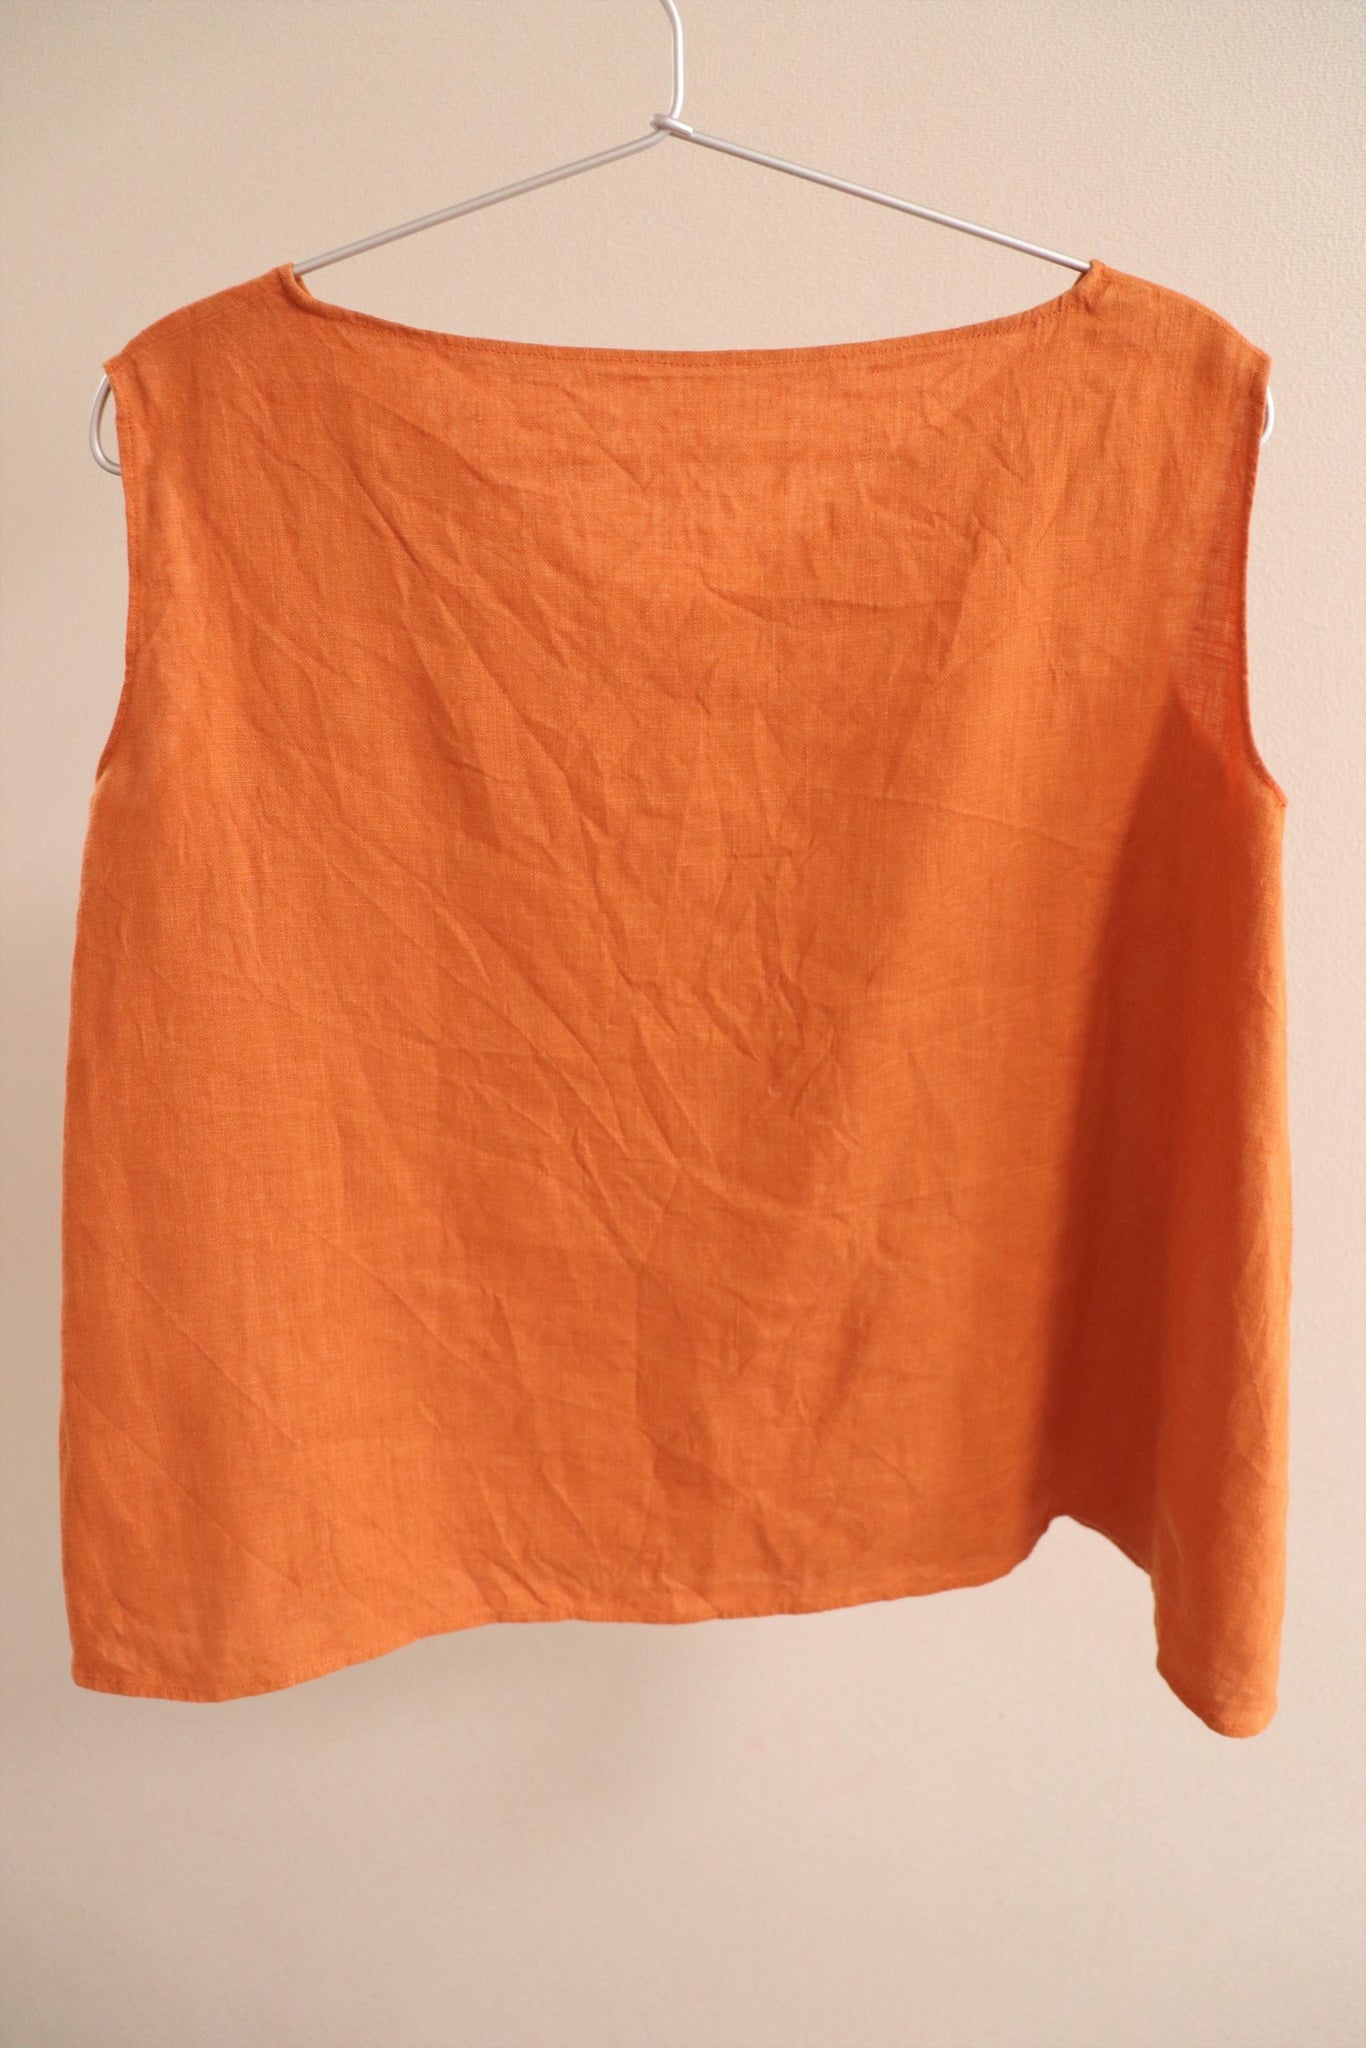 Vintage Linen Top Orange